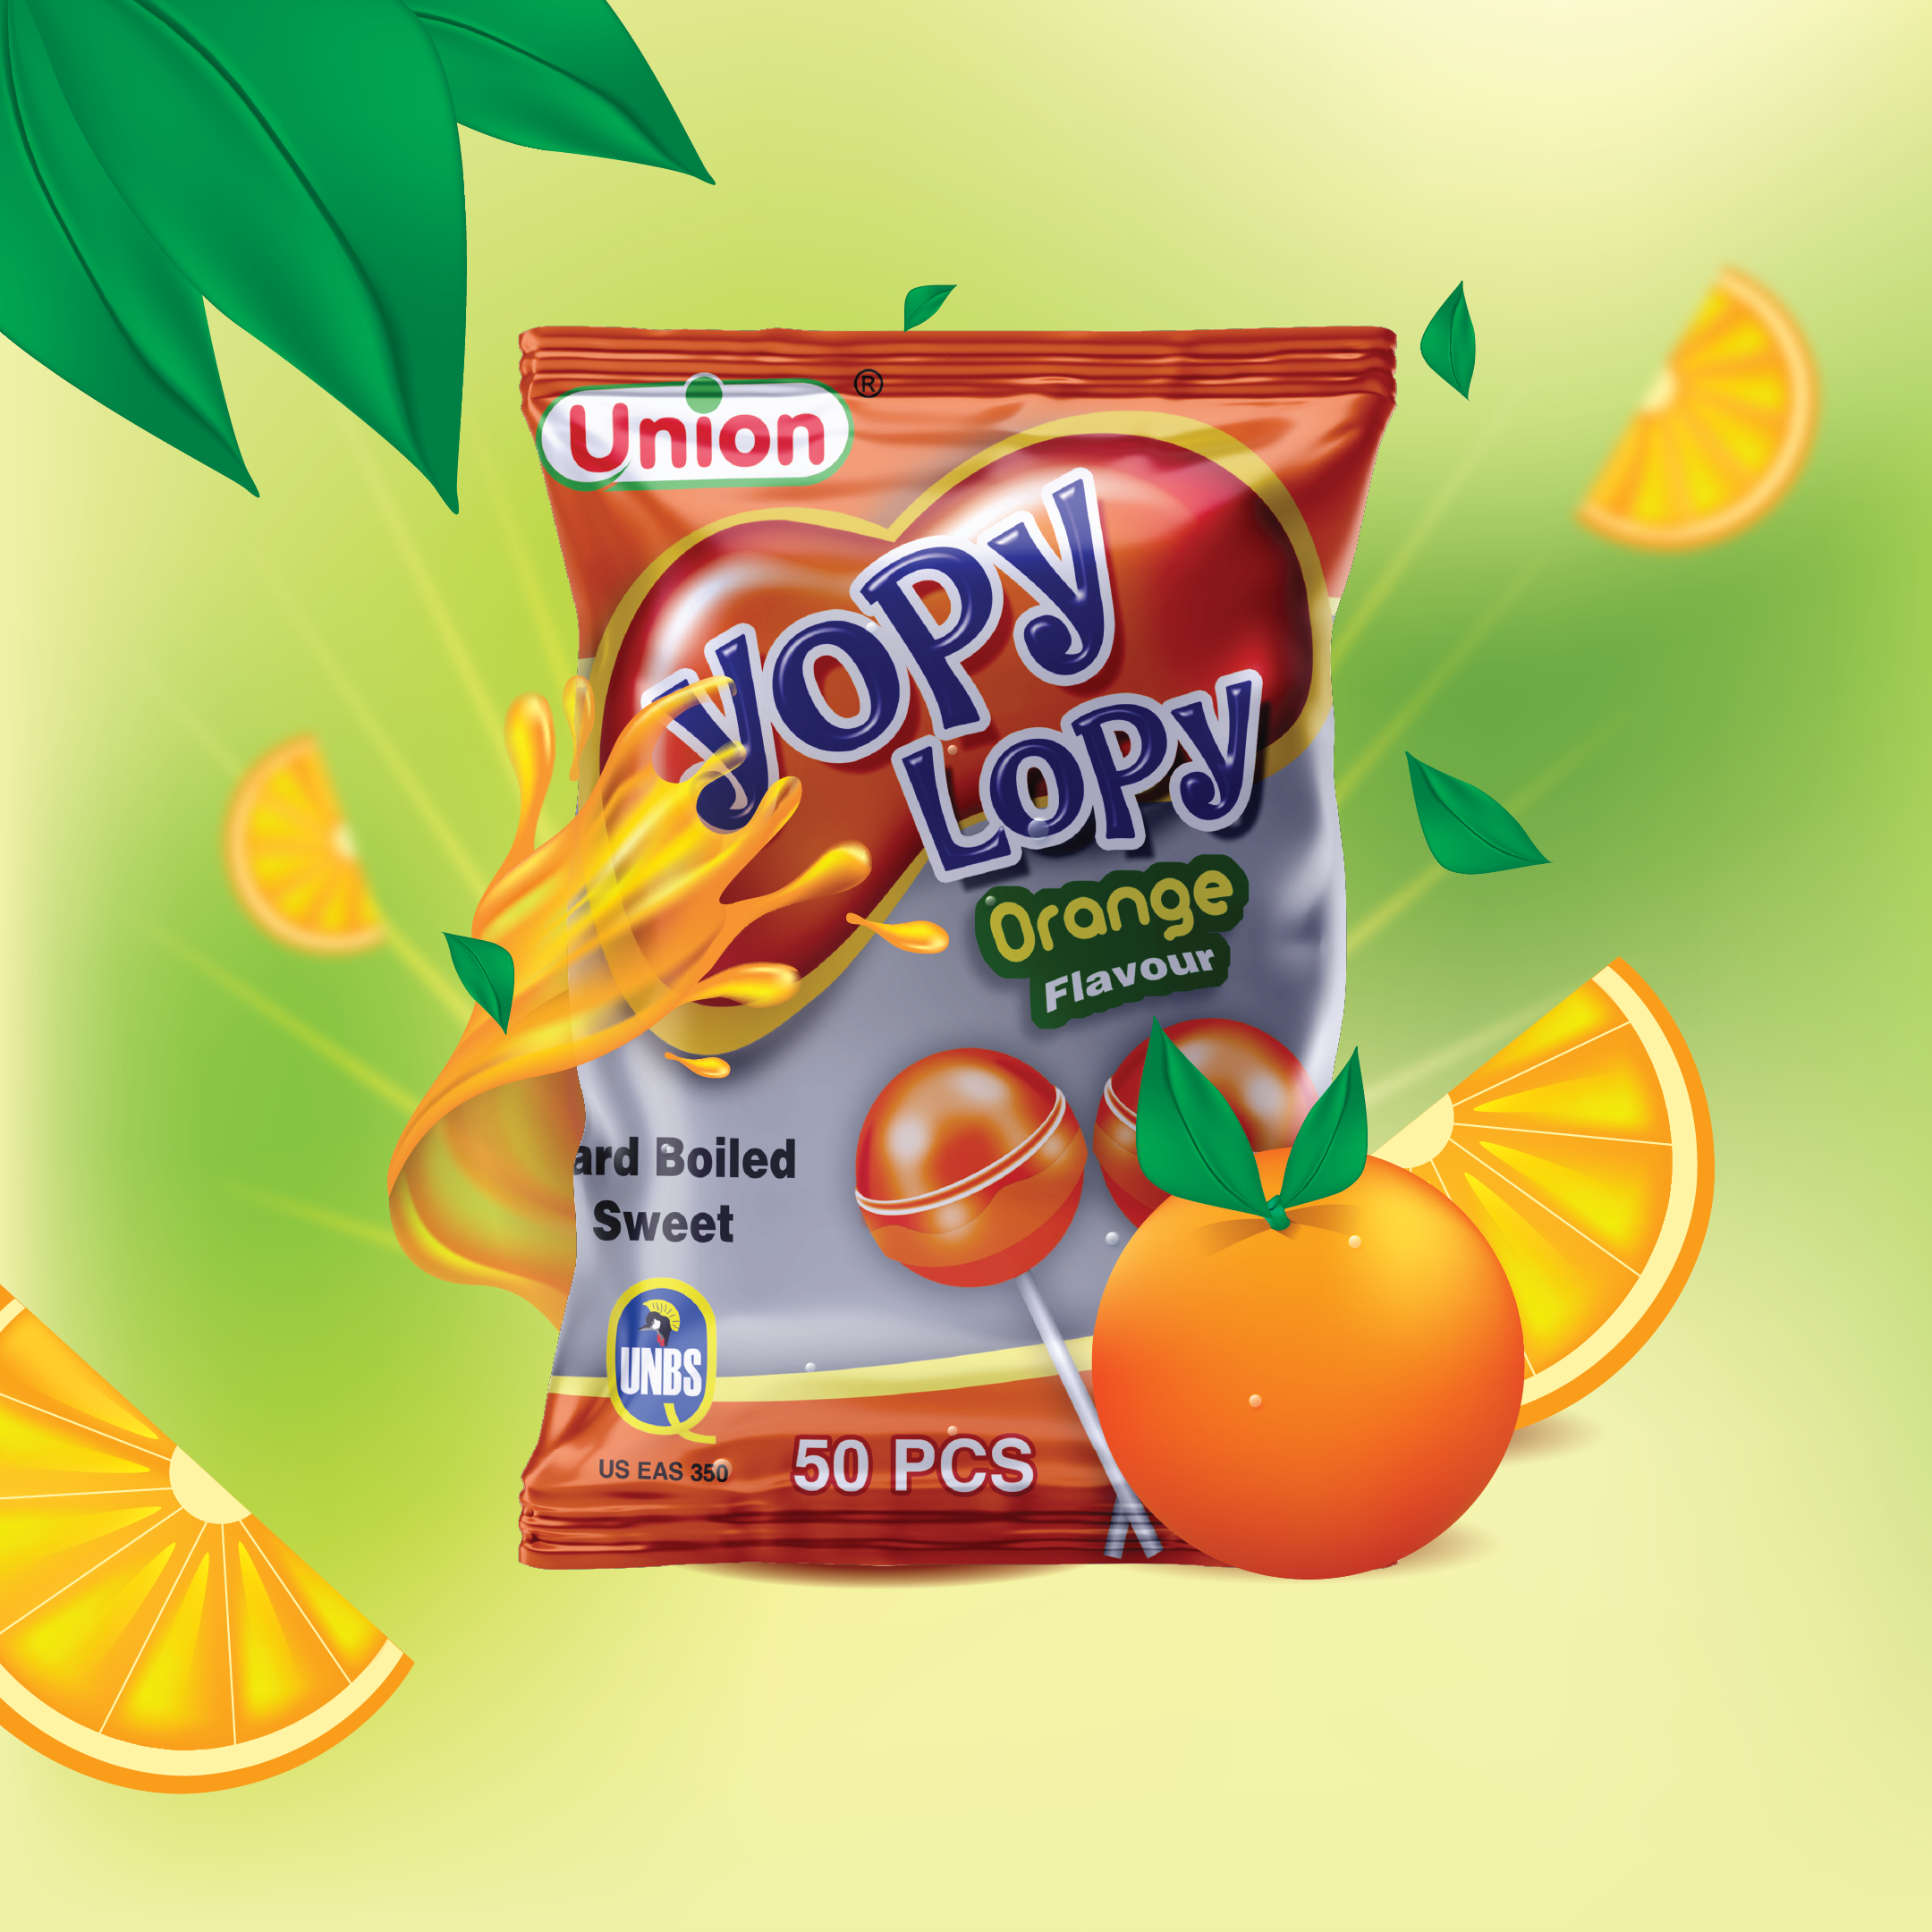 Union Yopy Lopy Orange Flavour Lollipop